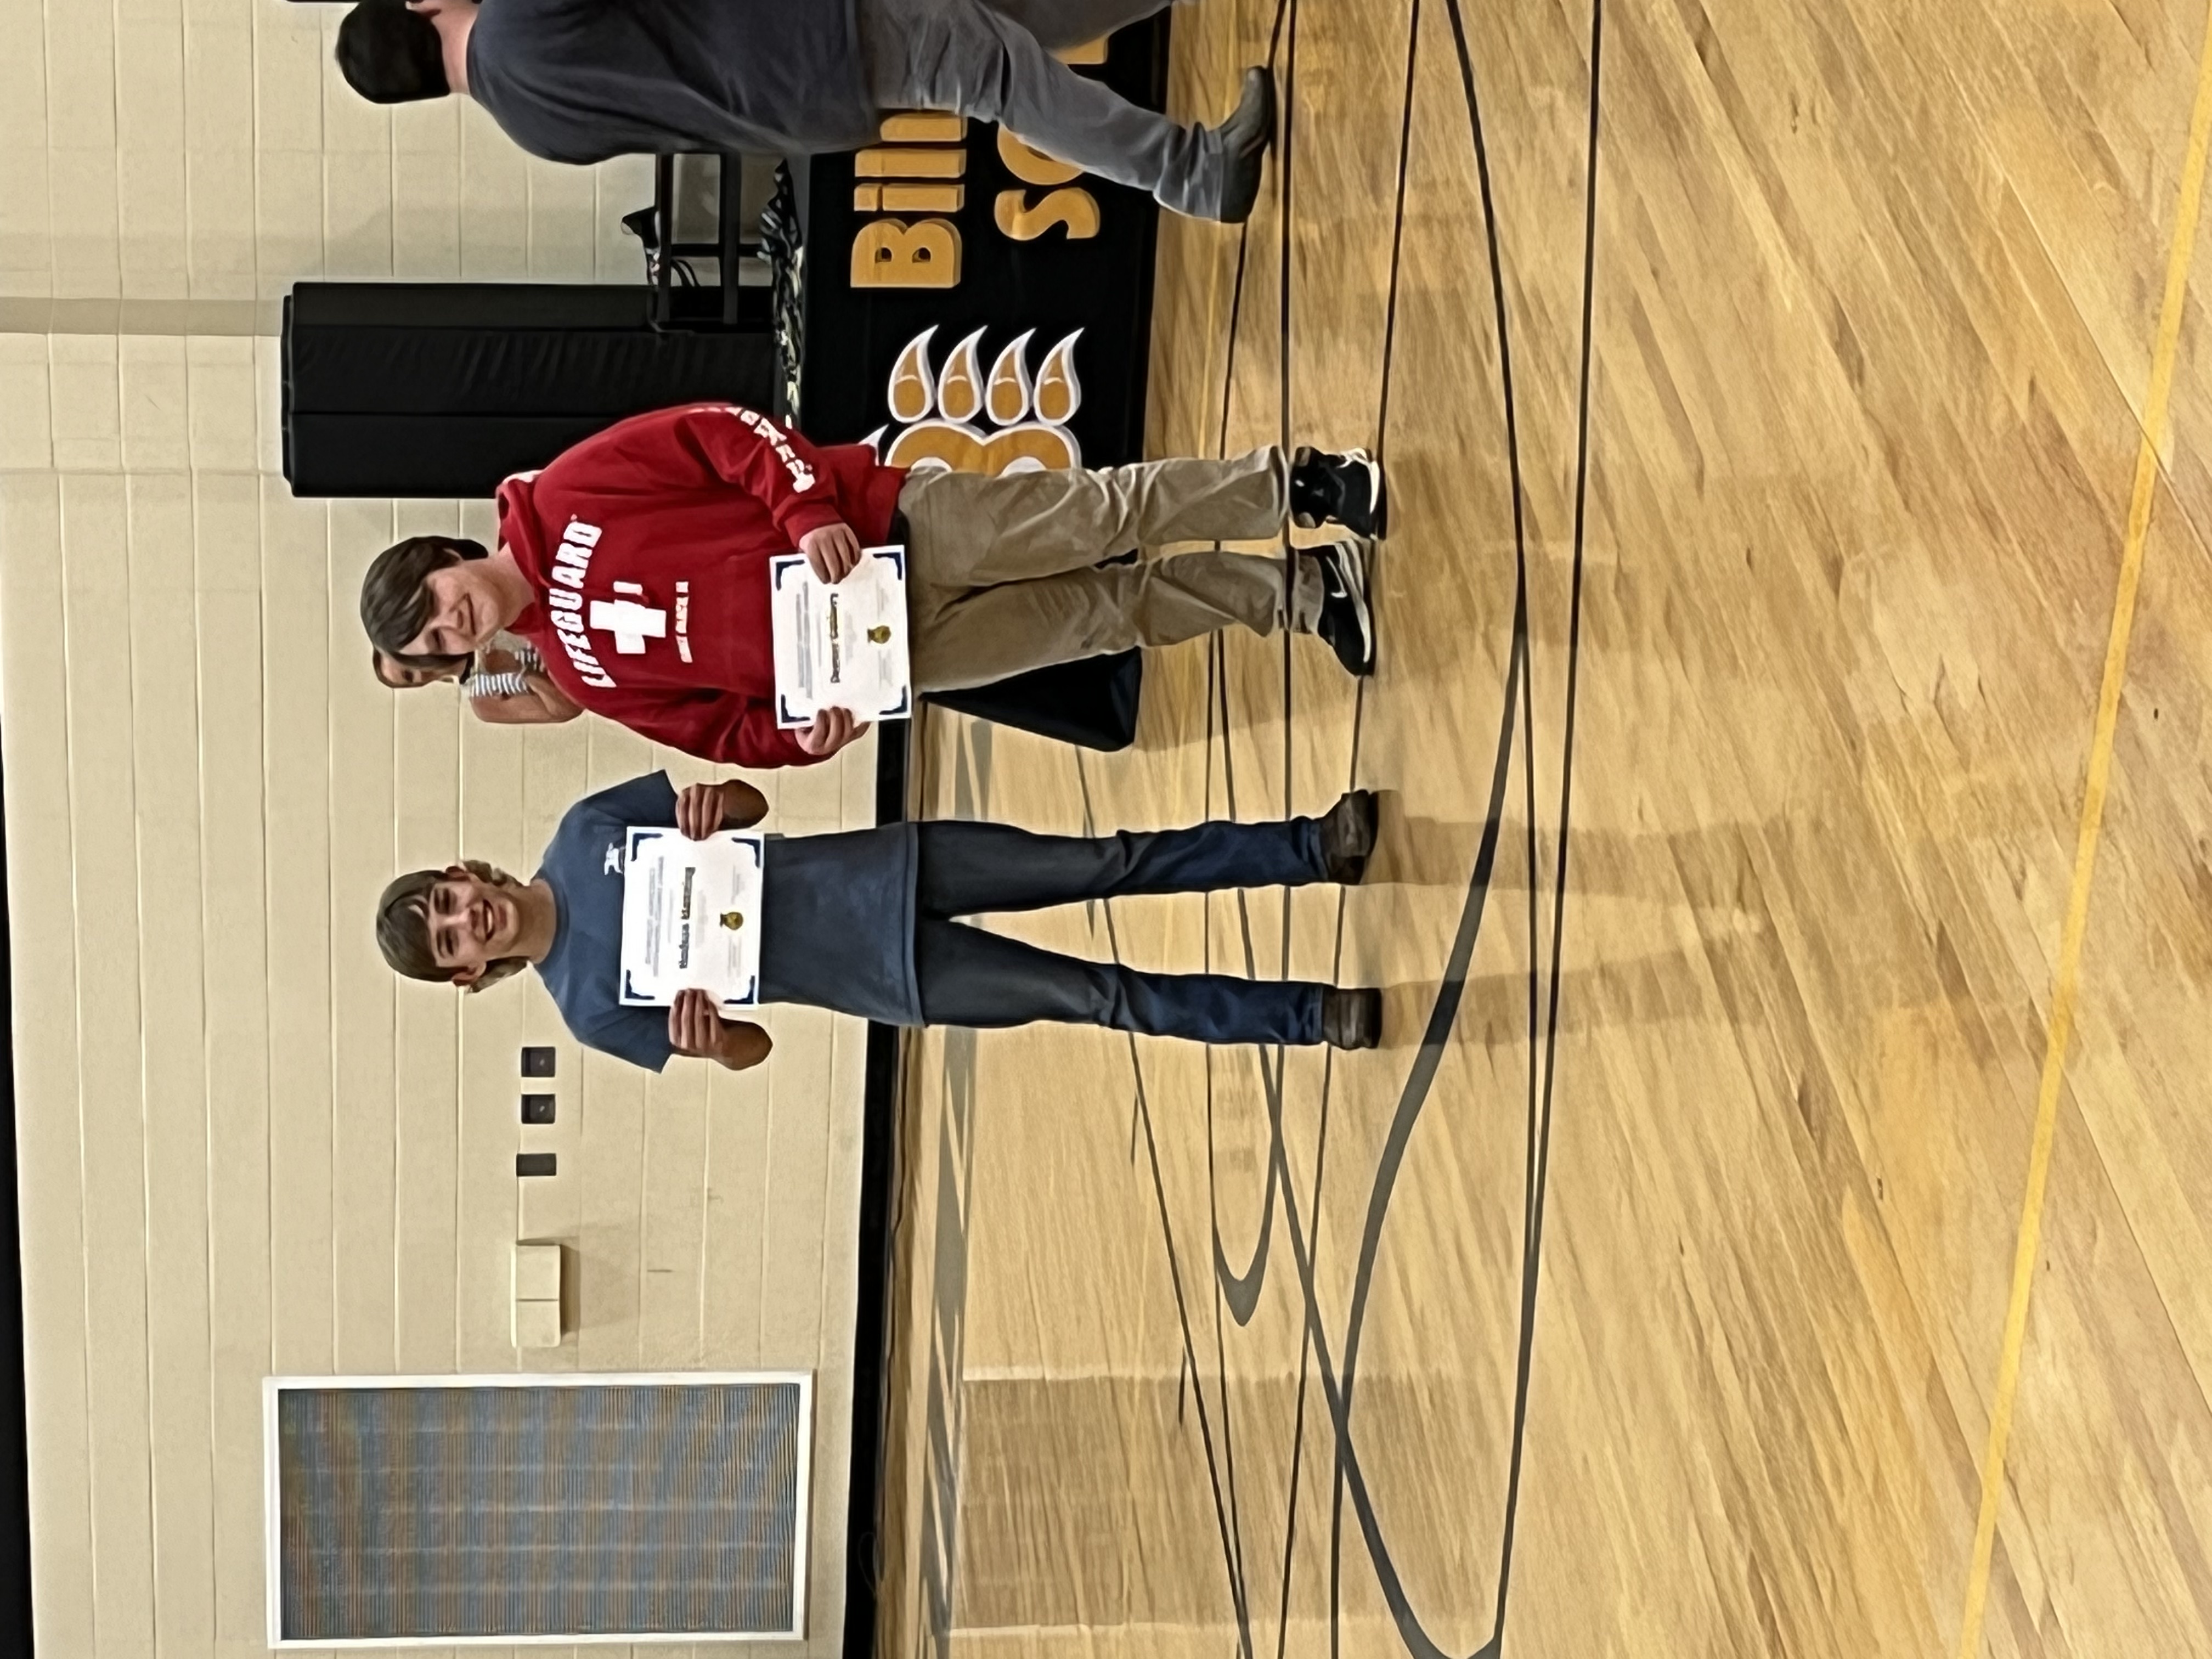 Student receiving awards